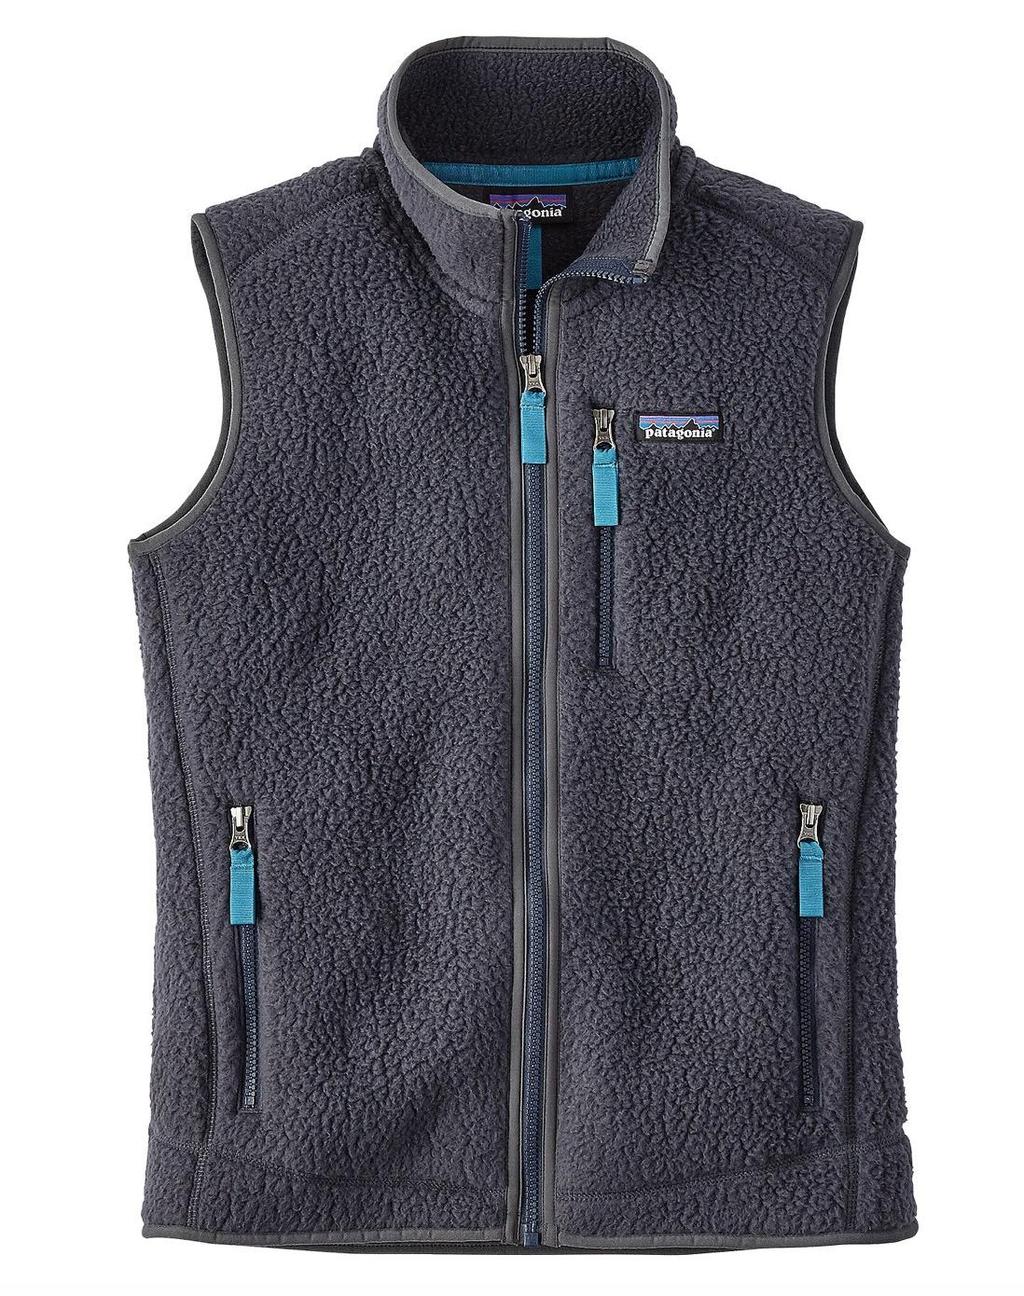 For the Ladies Patagonia Nano Puff Jacket Price: $199.00 $169.